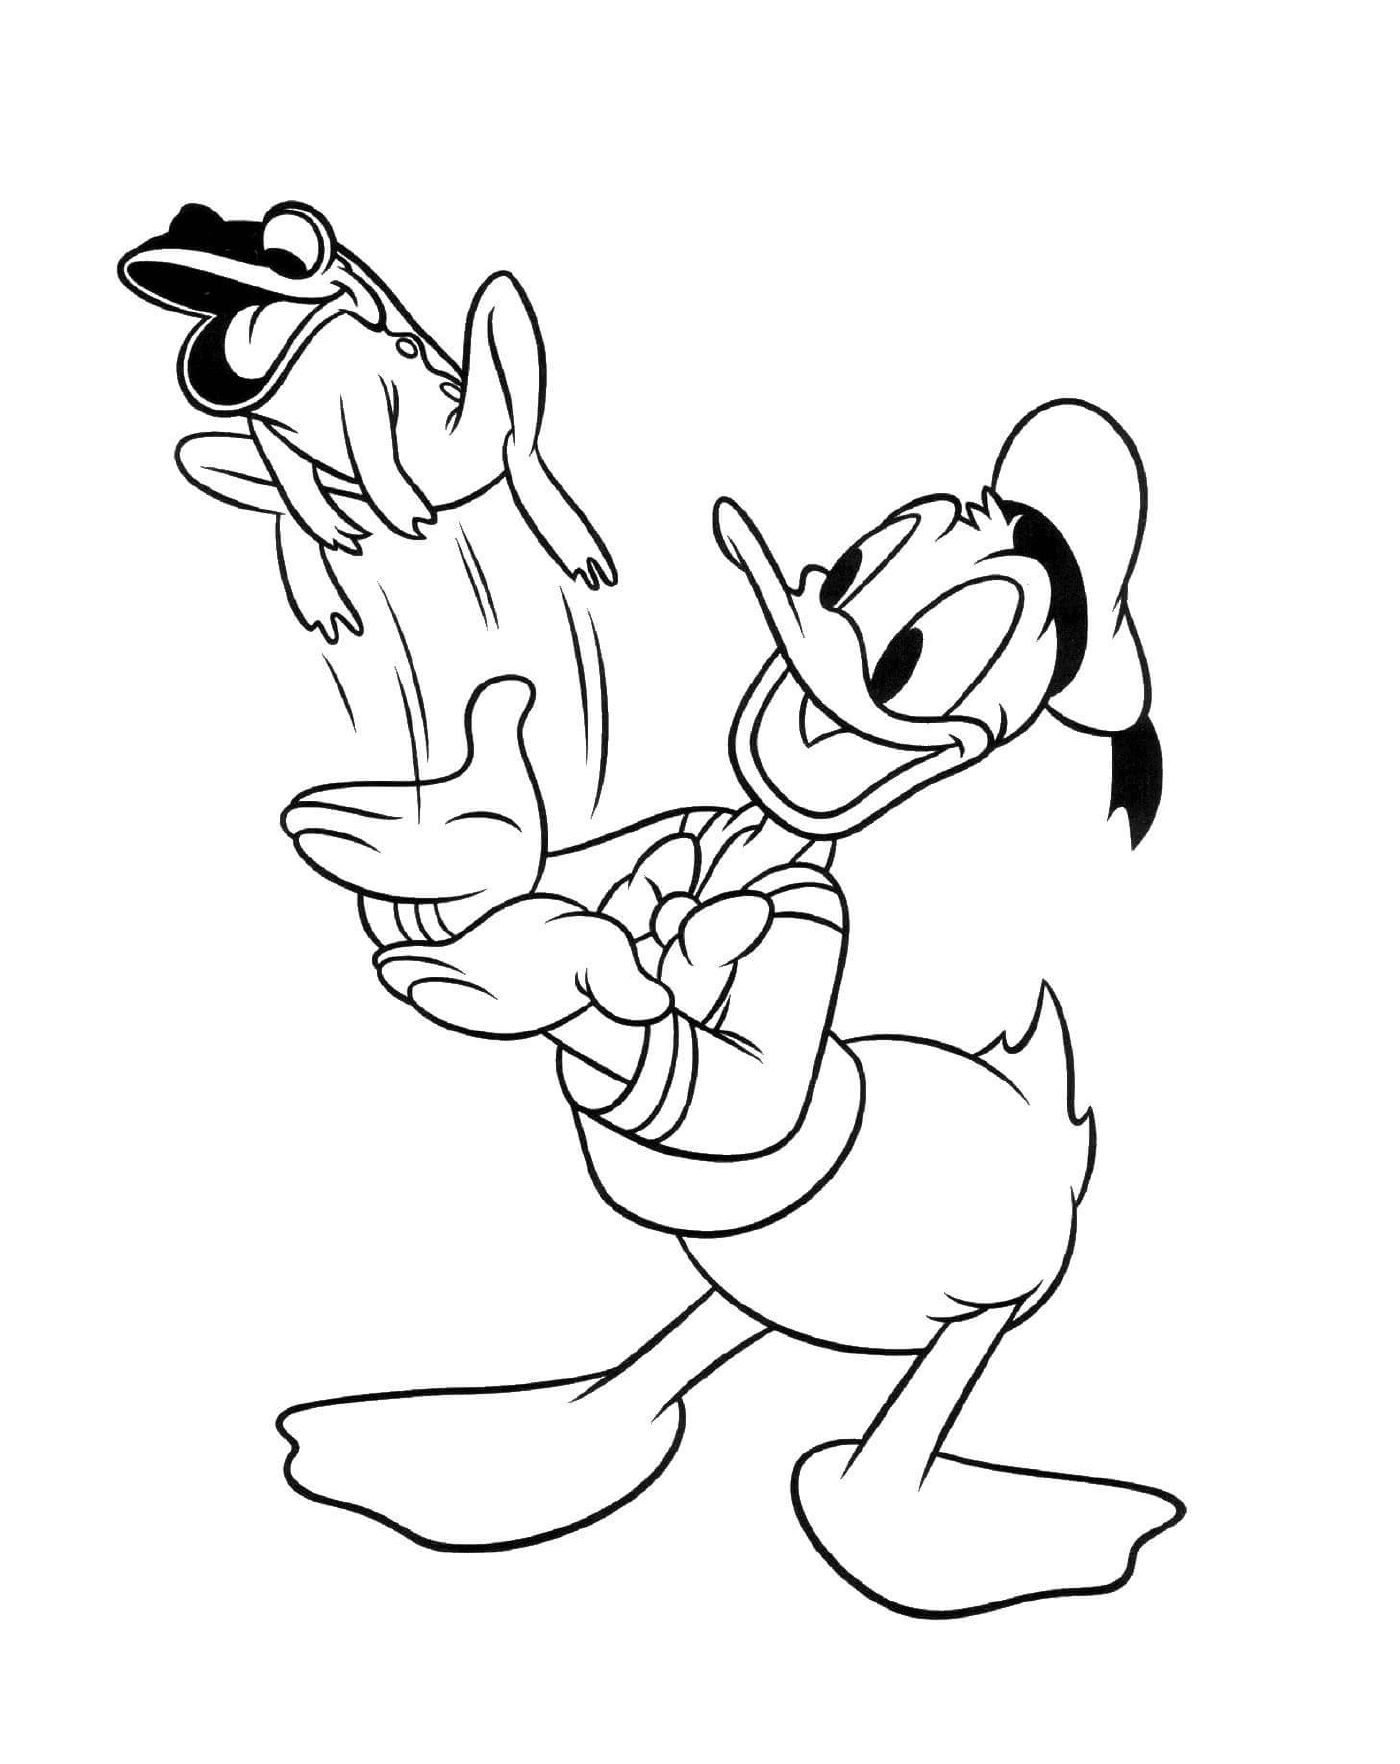  Donald Duck 和狗玩 